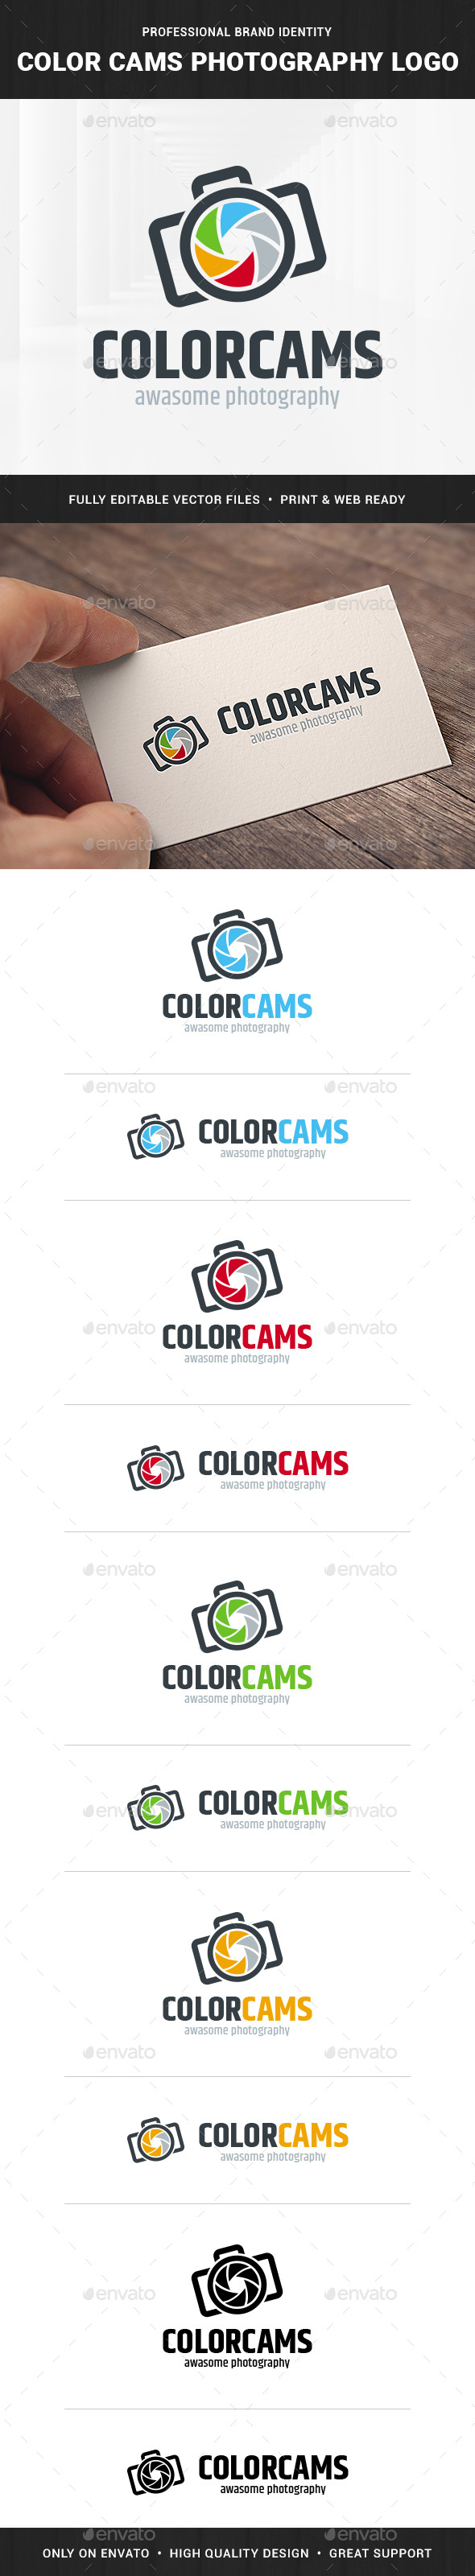 Color Cams - Photography Logo